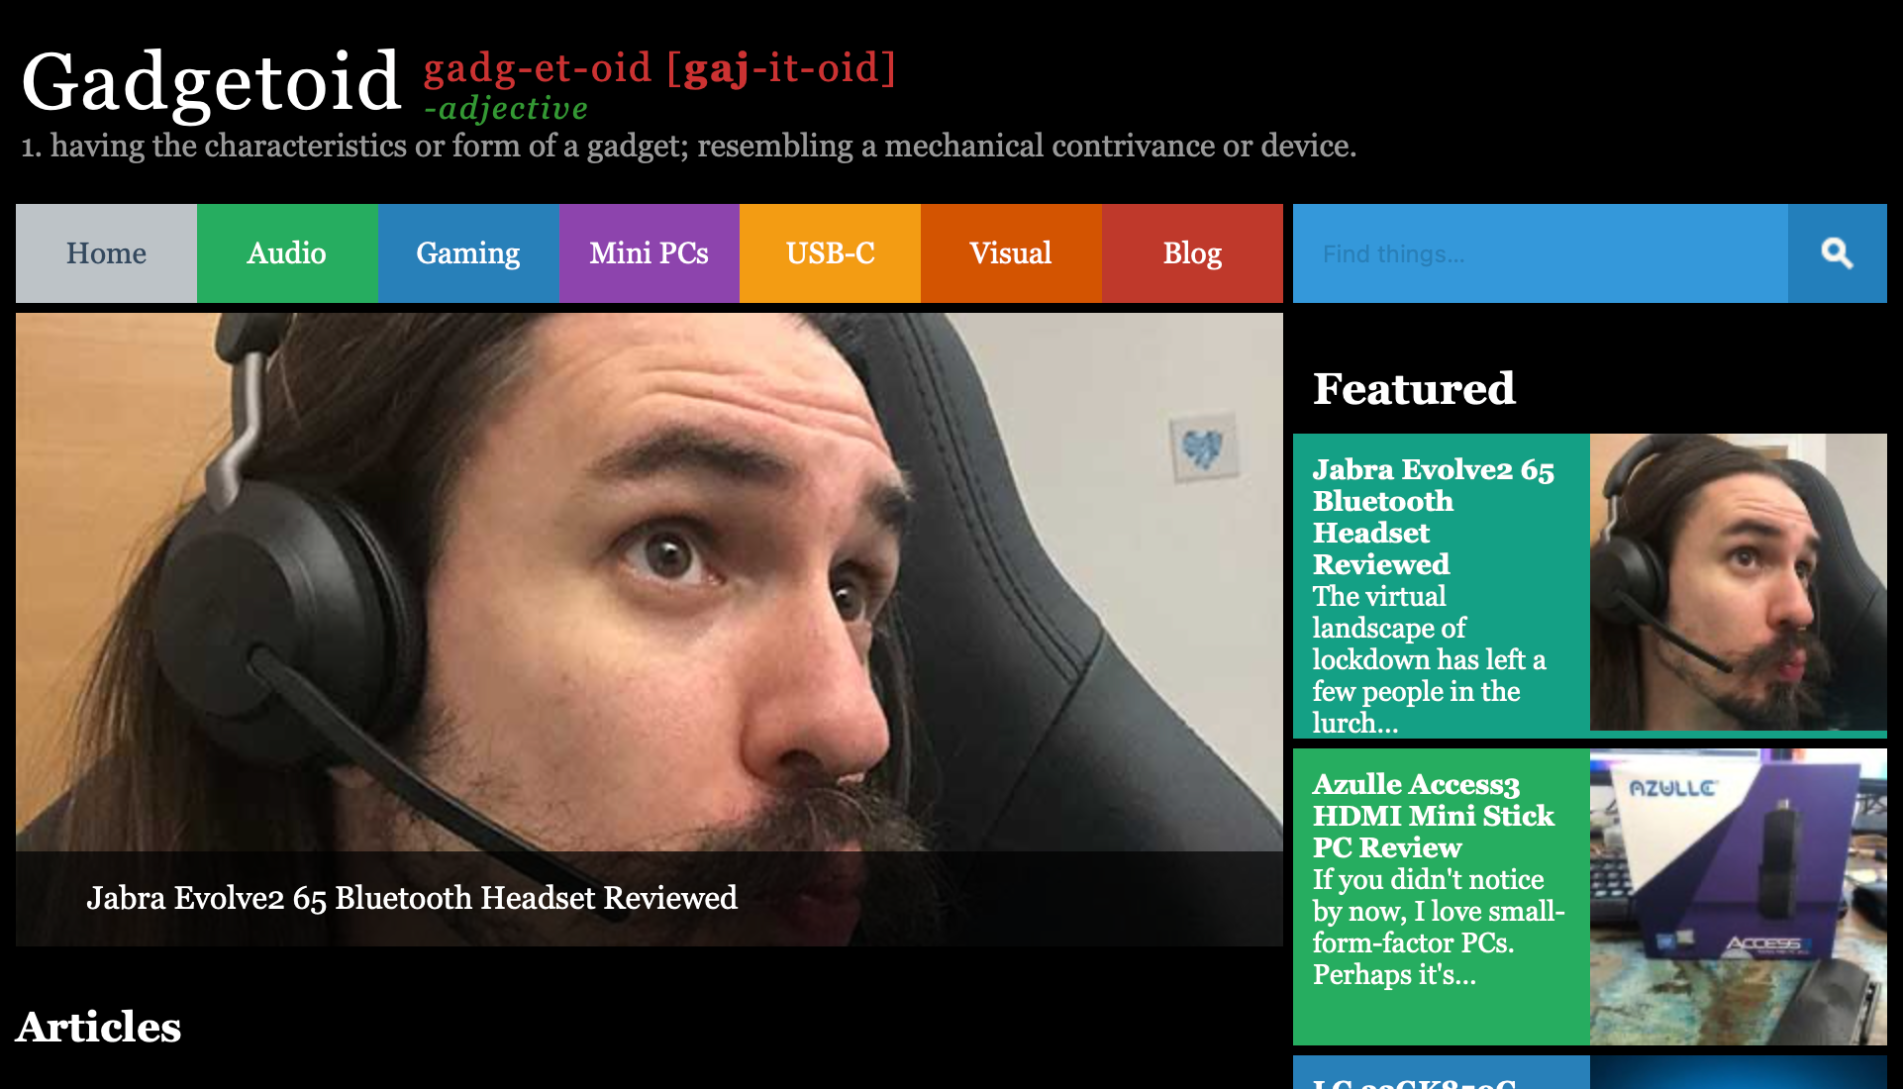 8BitDo 2.4GHz Ultimate Controller Review - Gadgetoid Gadgetoid